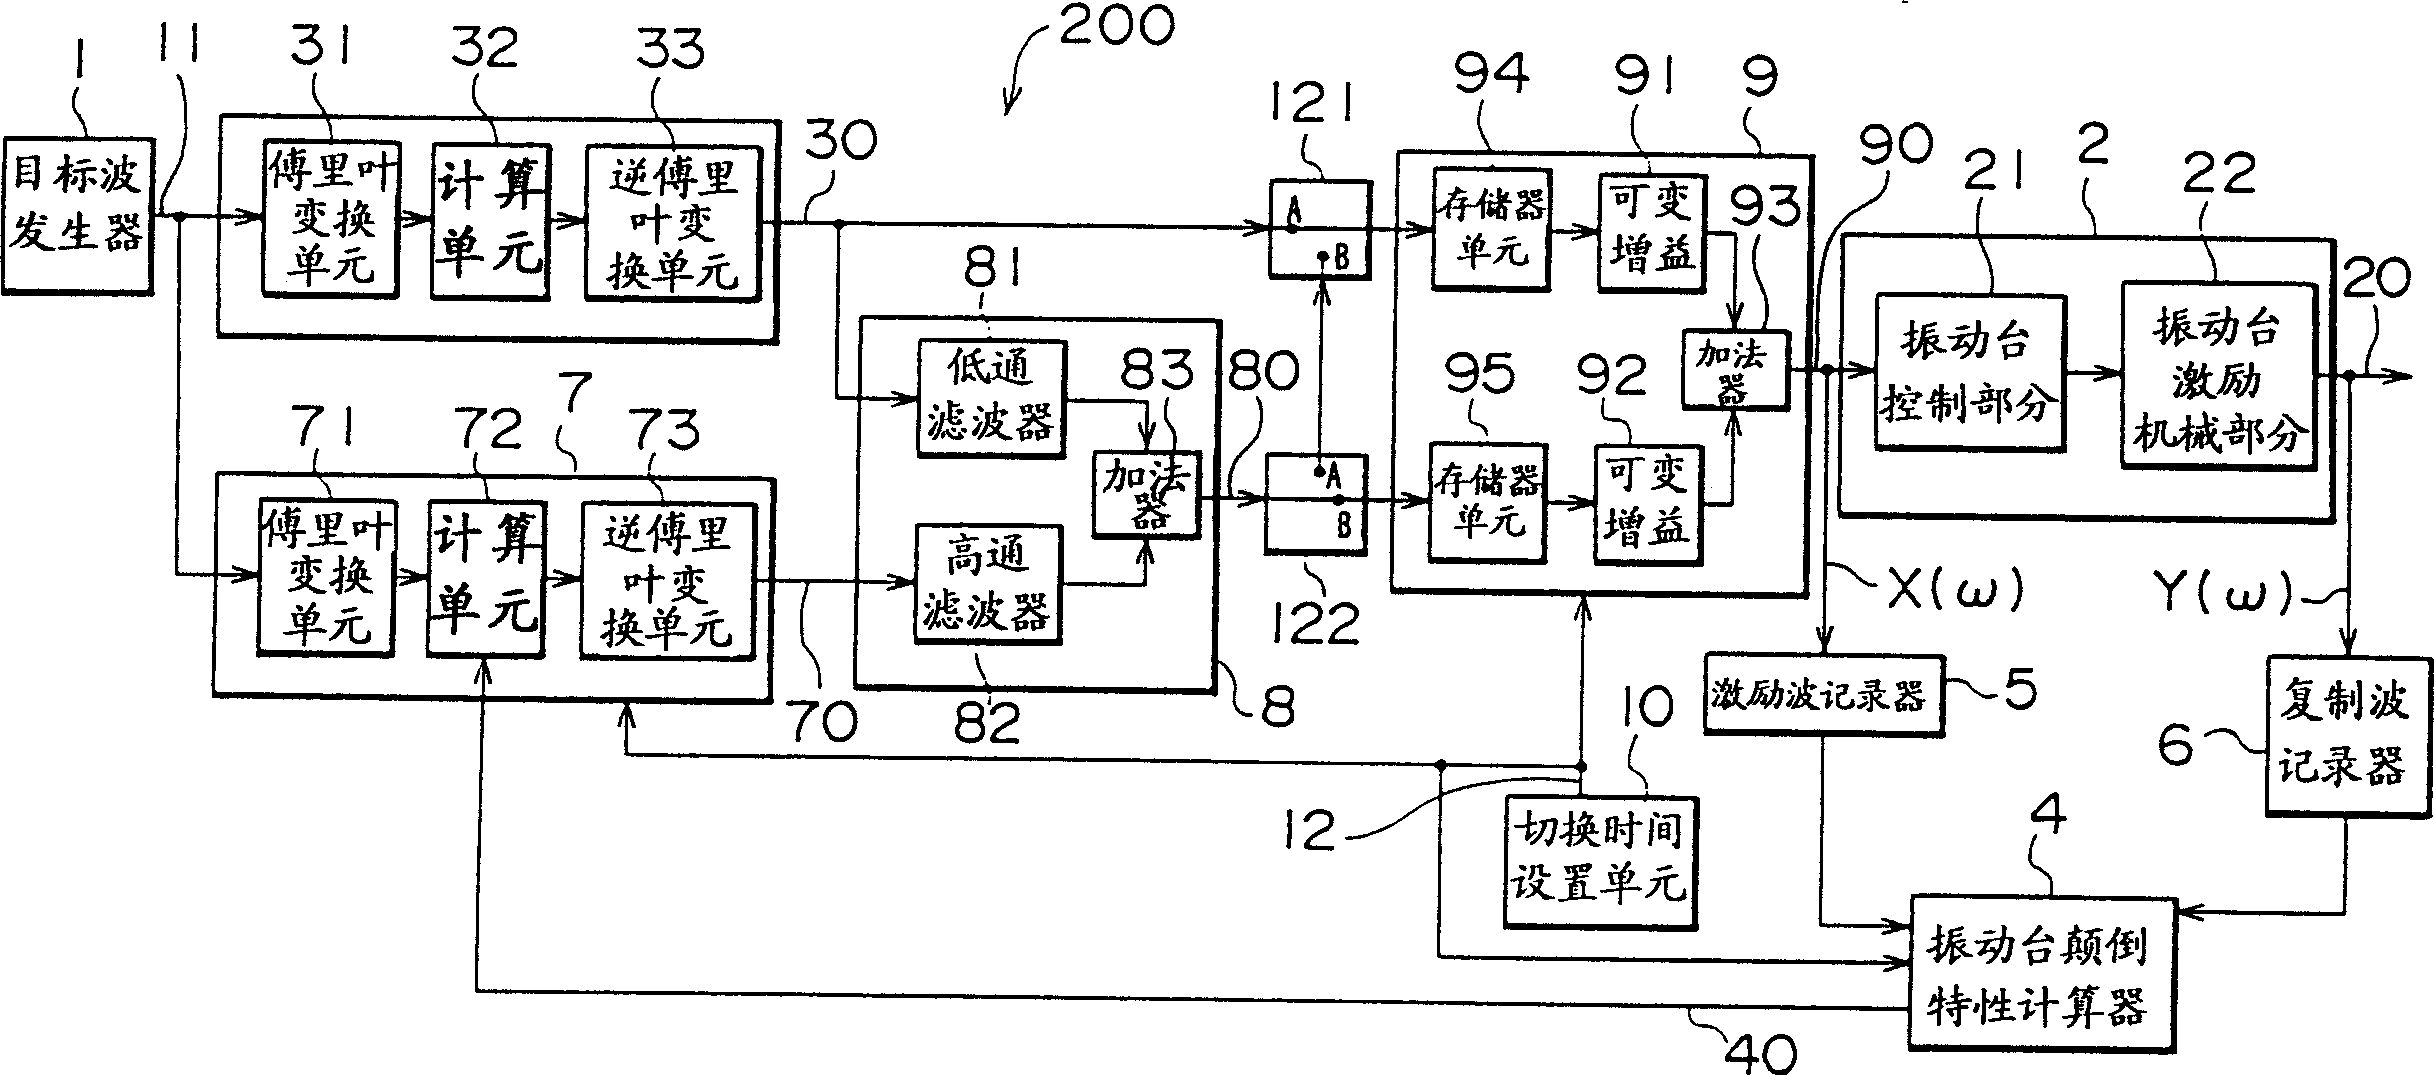 Waveform controller for vibro-bench